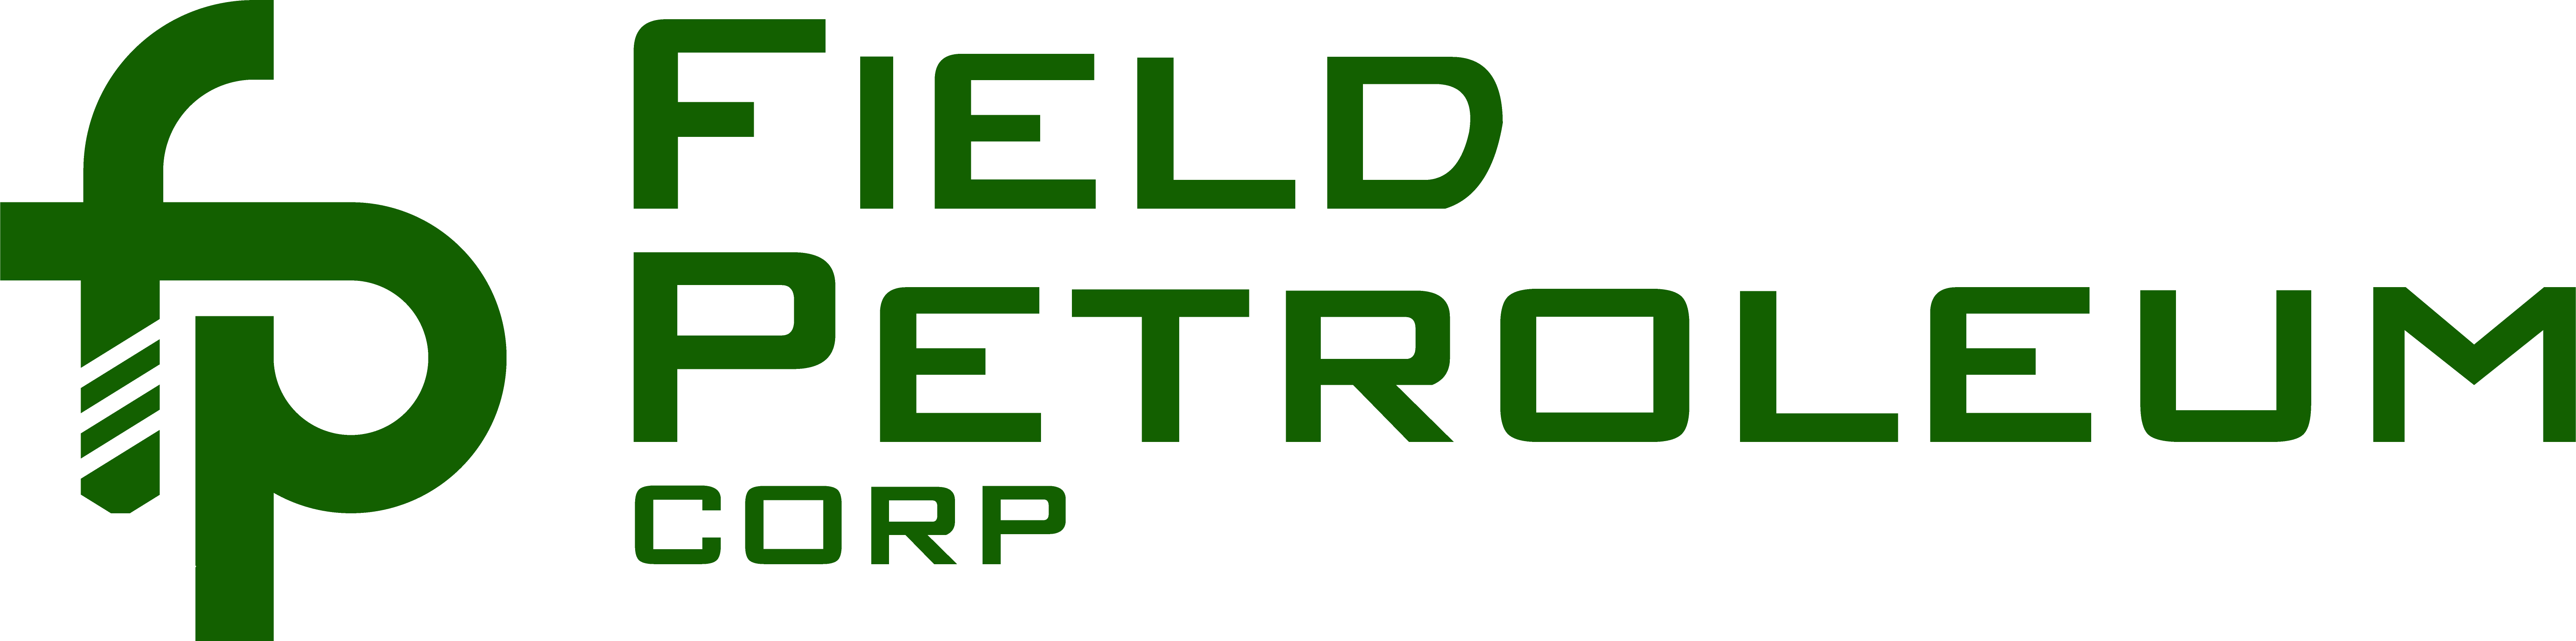 Field Petro